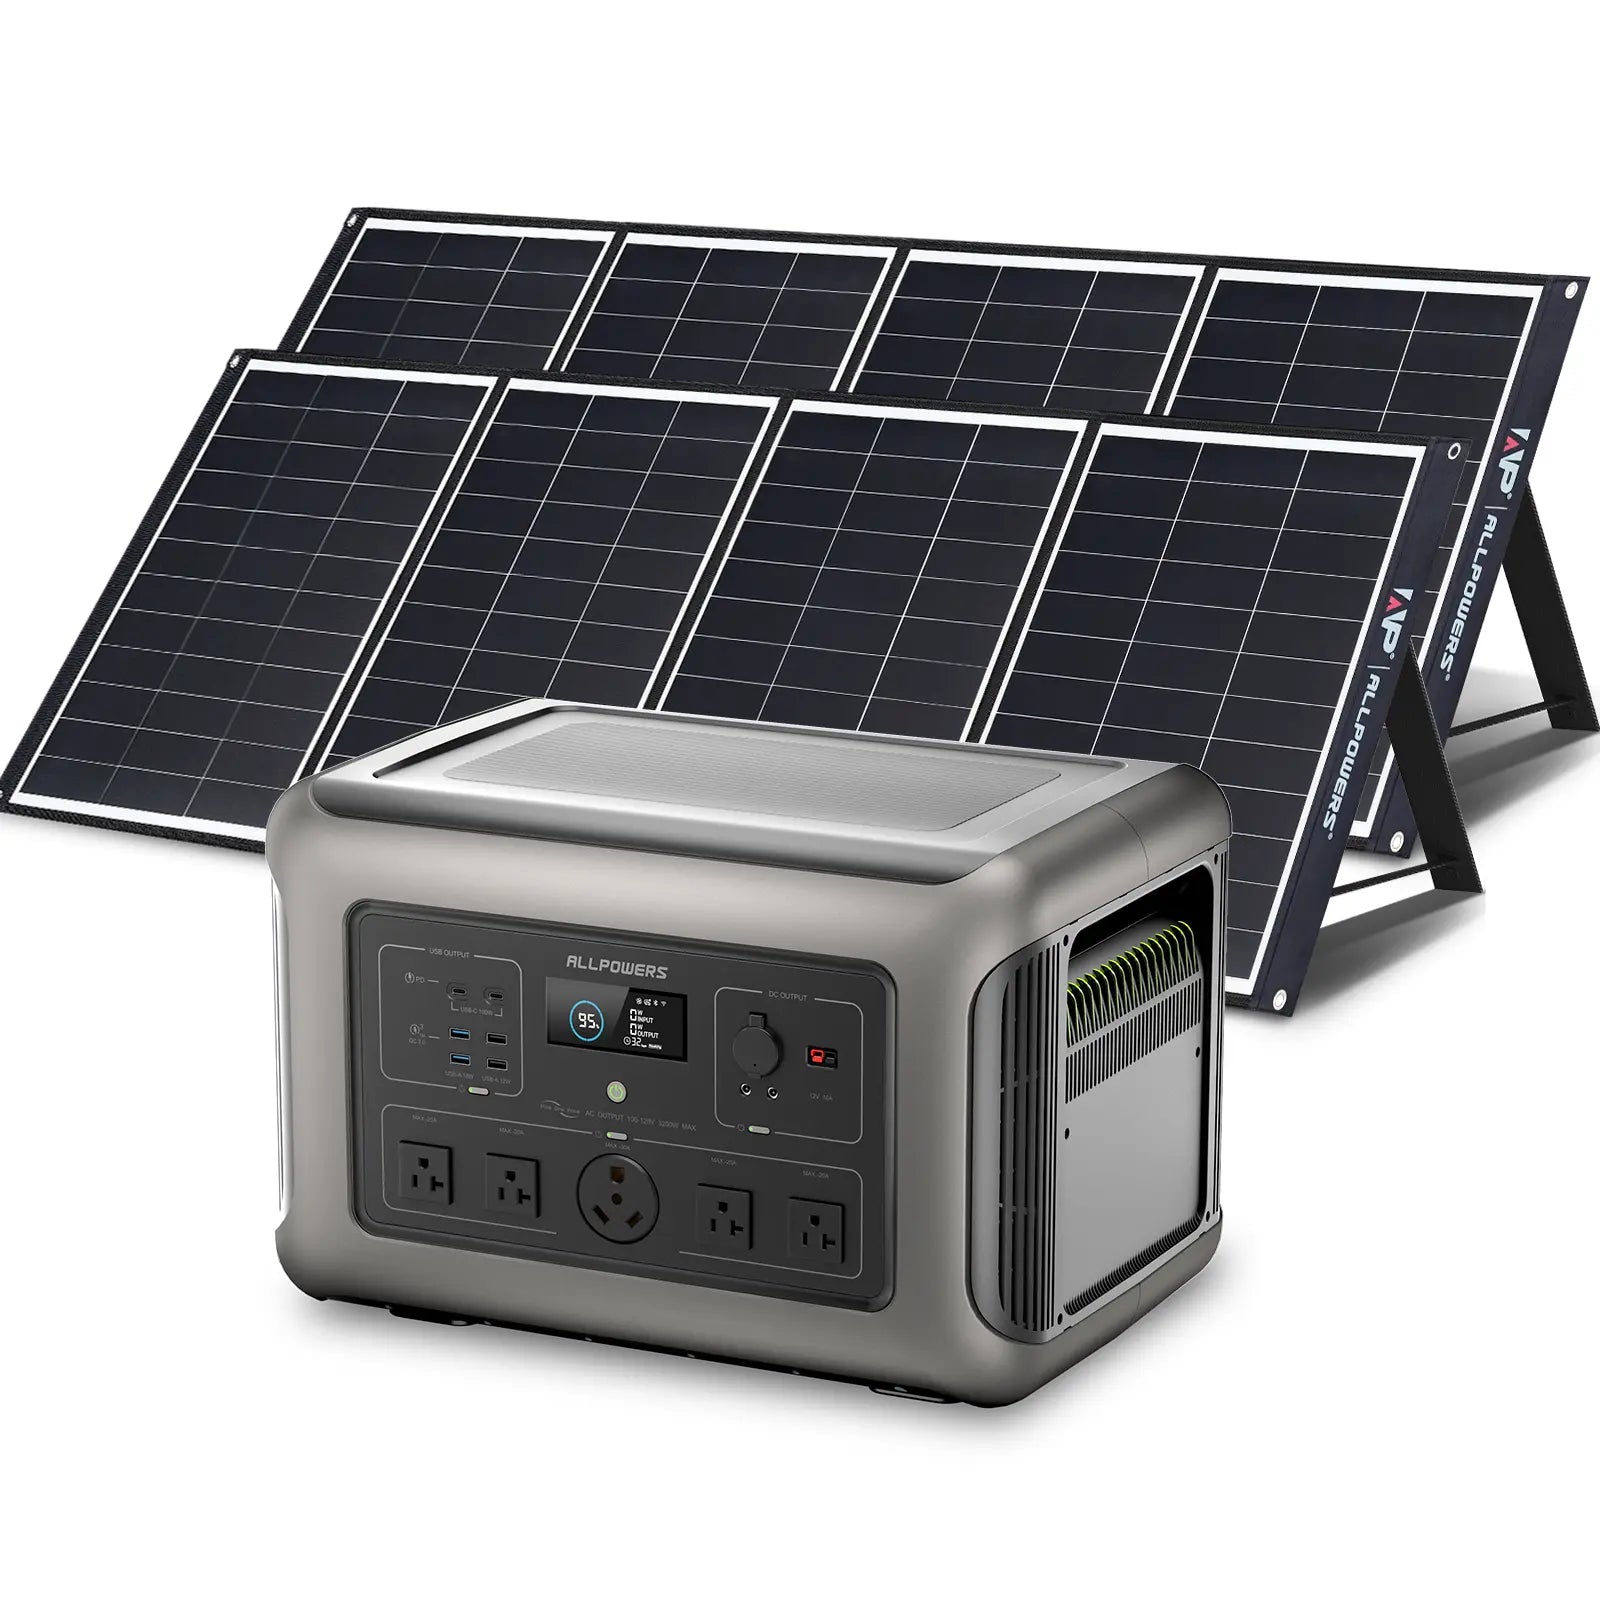 ALLPOWERS Solar Generator Kit 3200W (R3500 + 2 x SP035 200W Solar Panel)